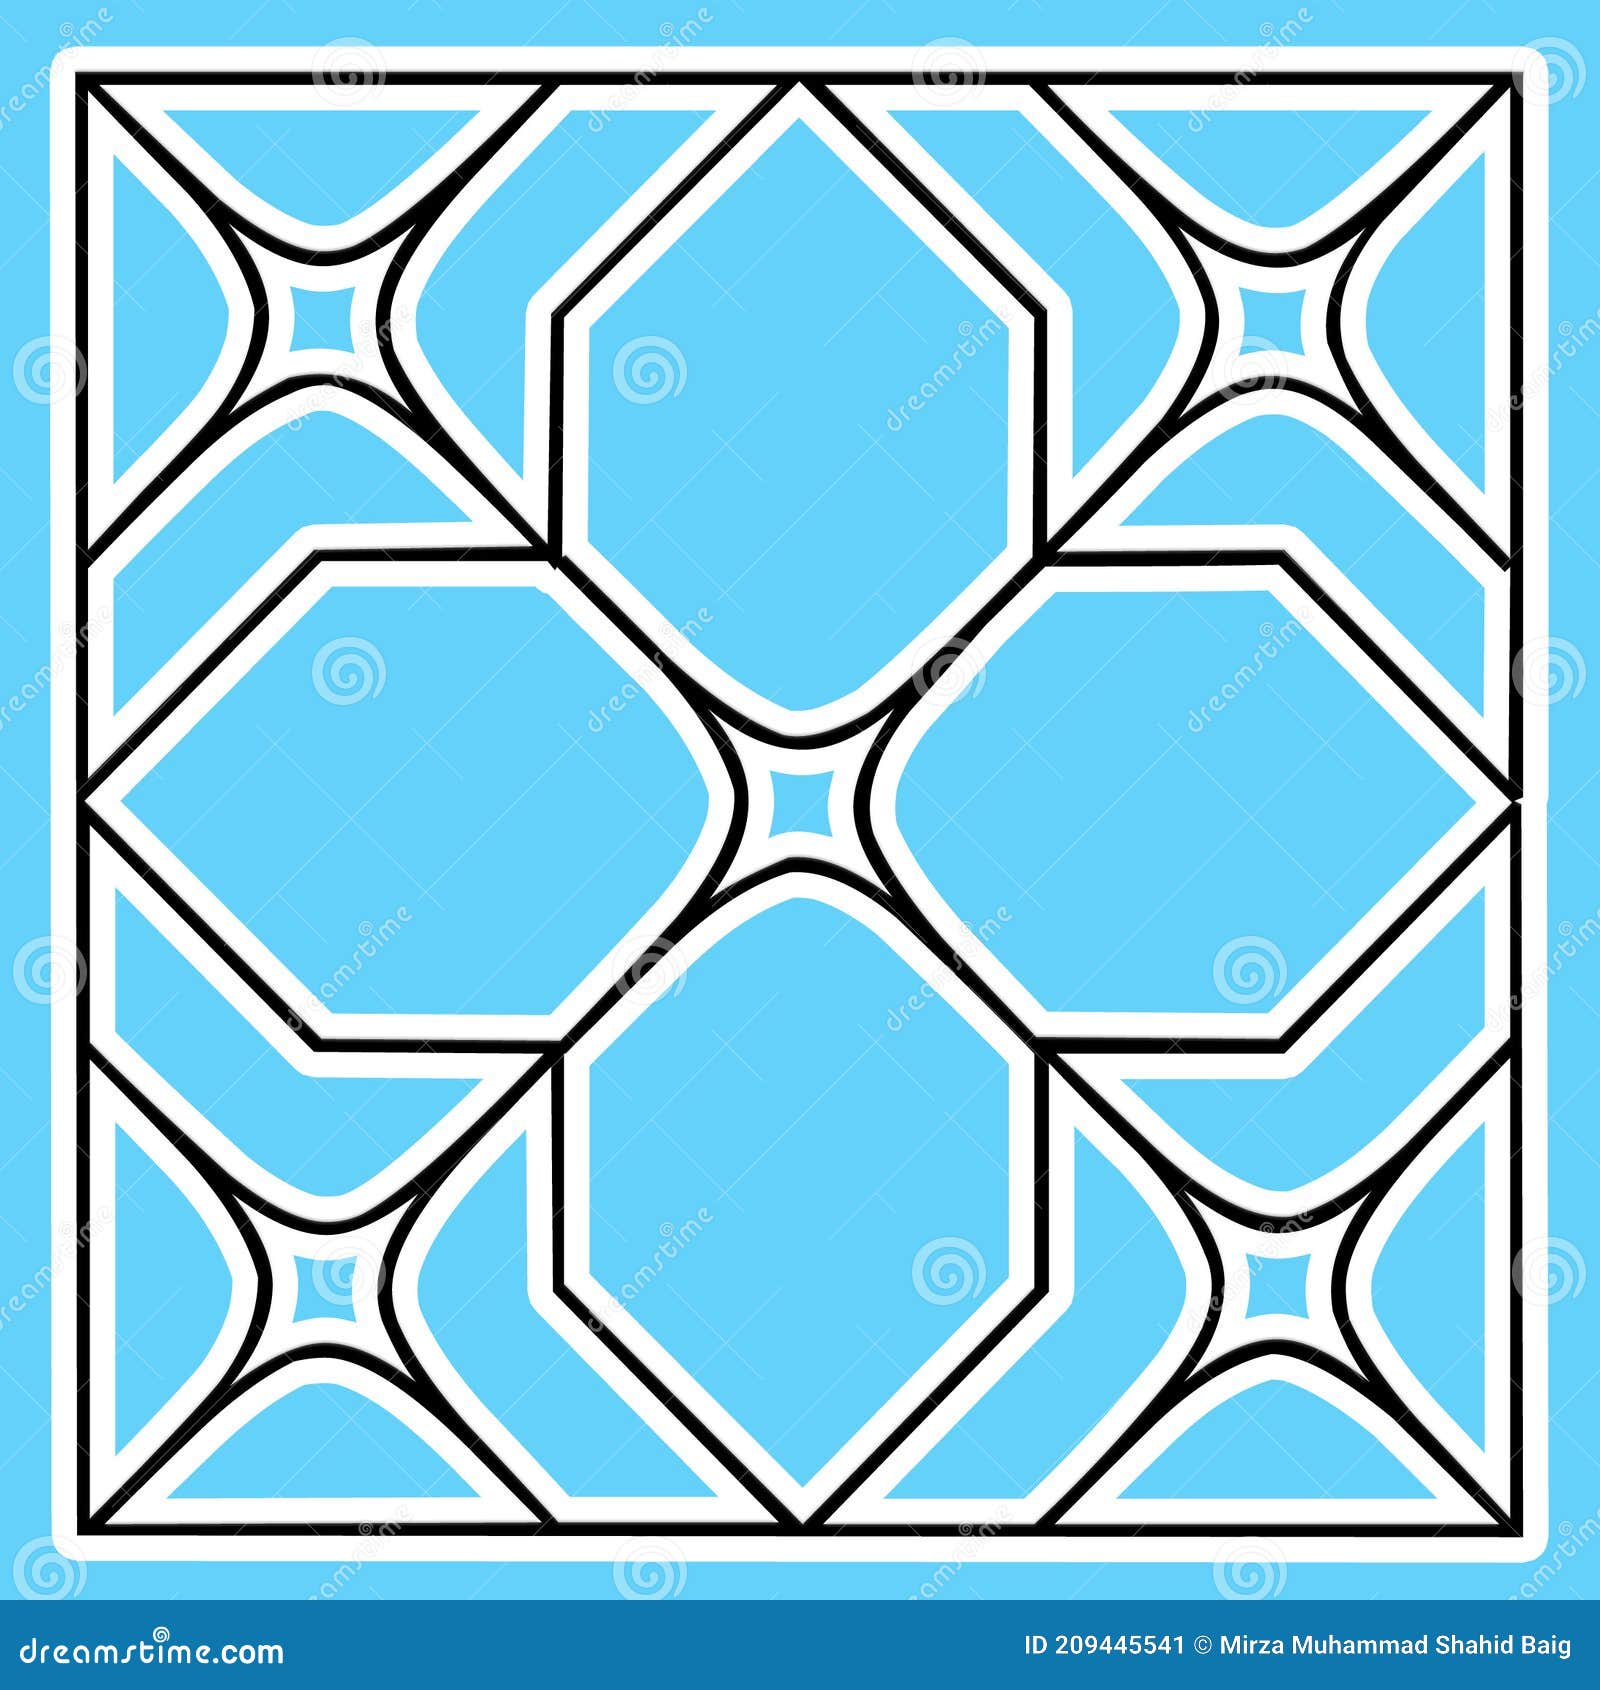 Latest Ceramic Floor Tile Design Layout Drawing Patterns Set 3 Stock